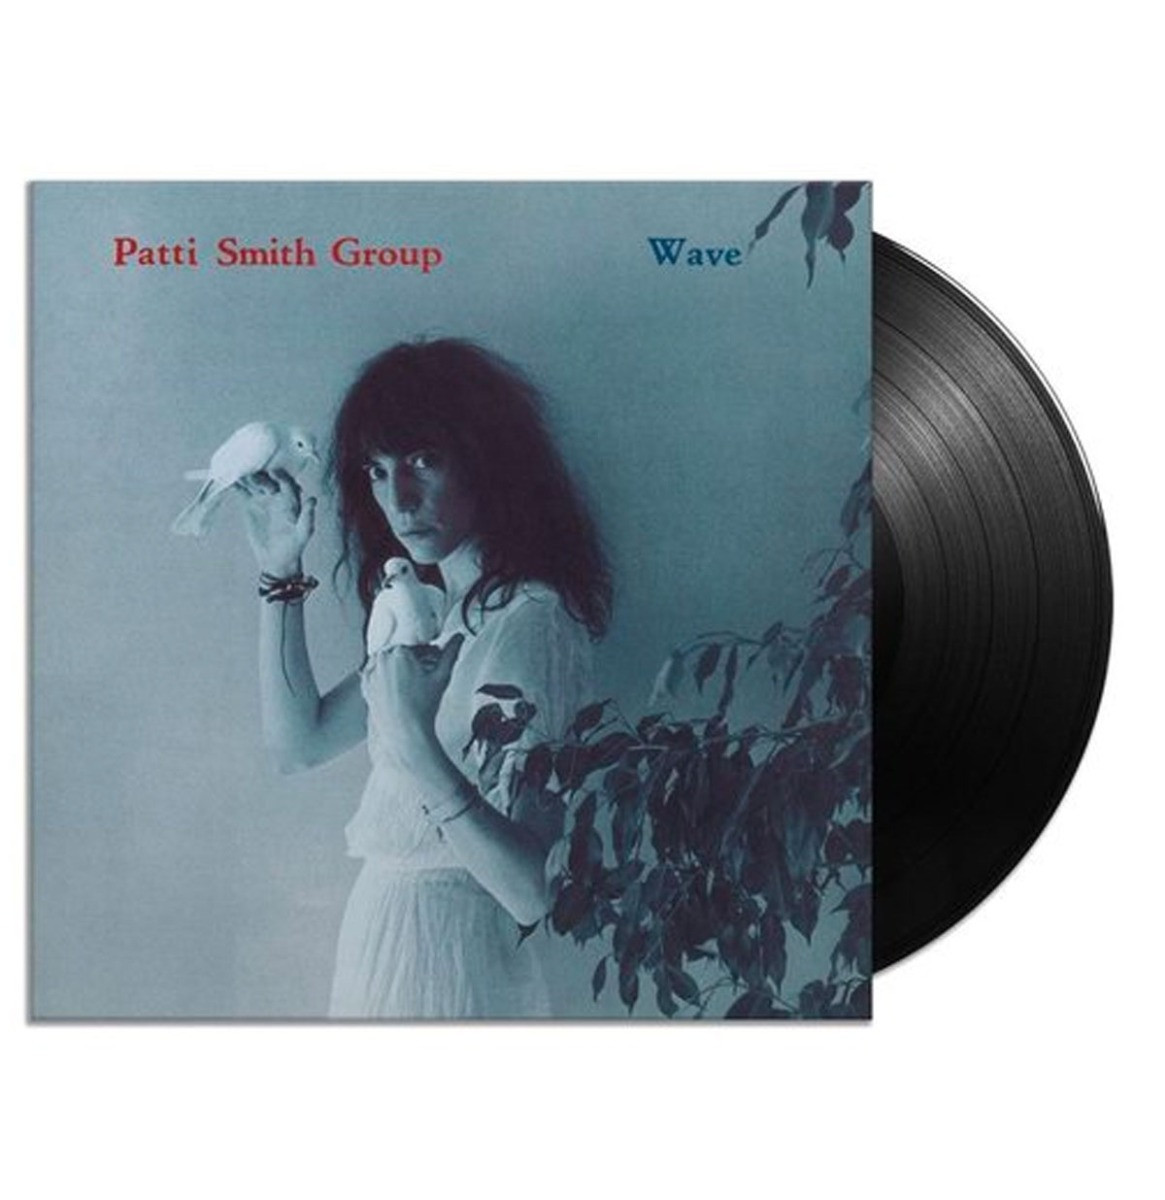 Patti Smith Group - Wave LP